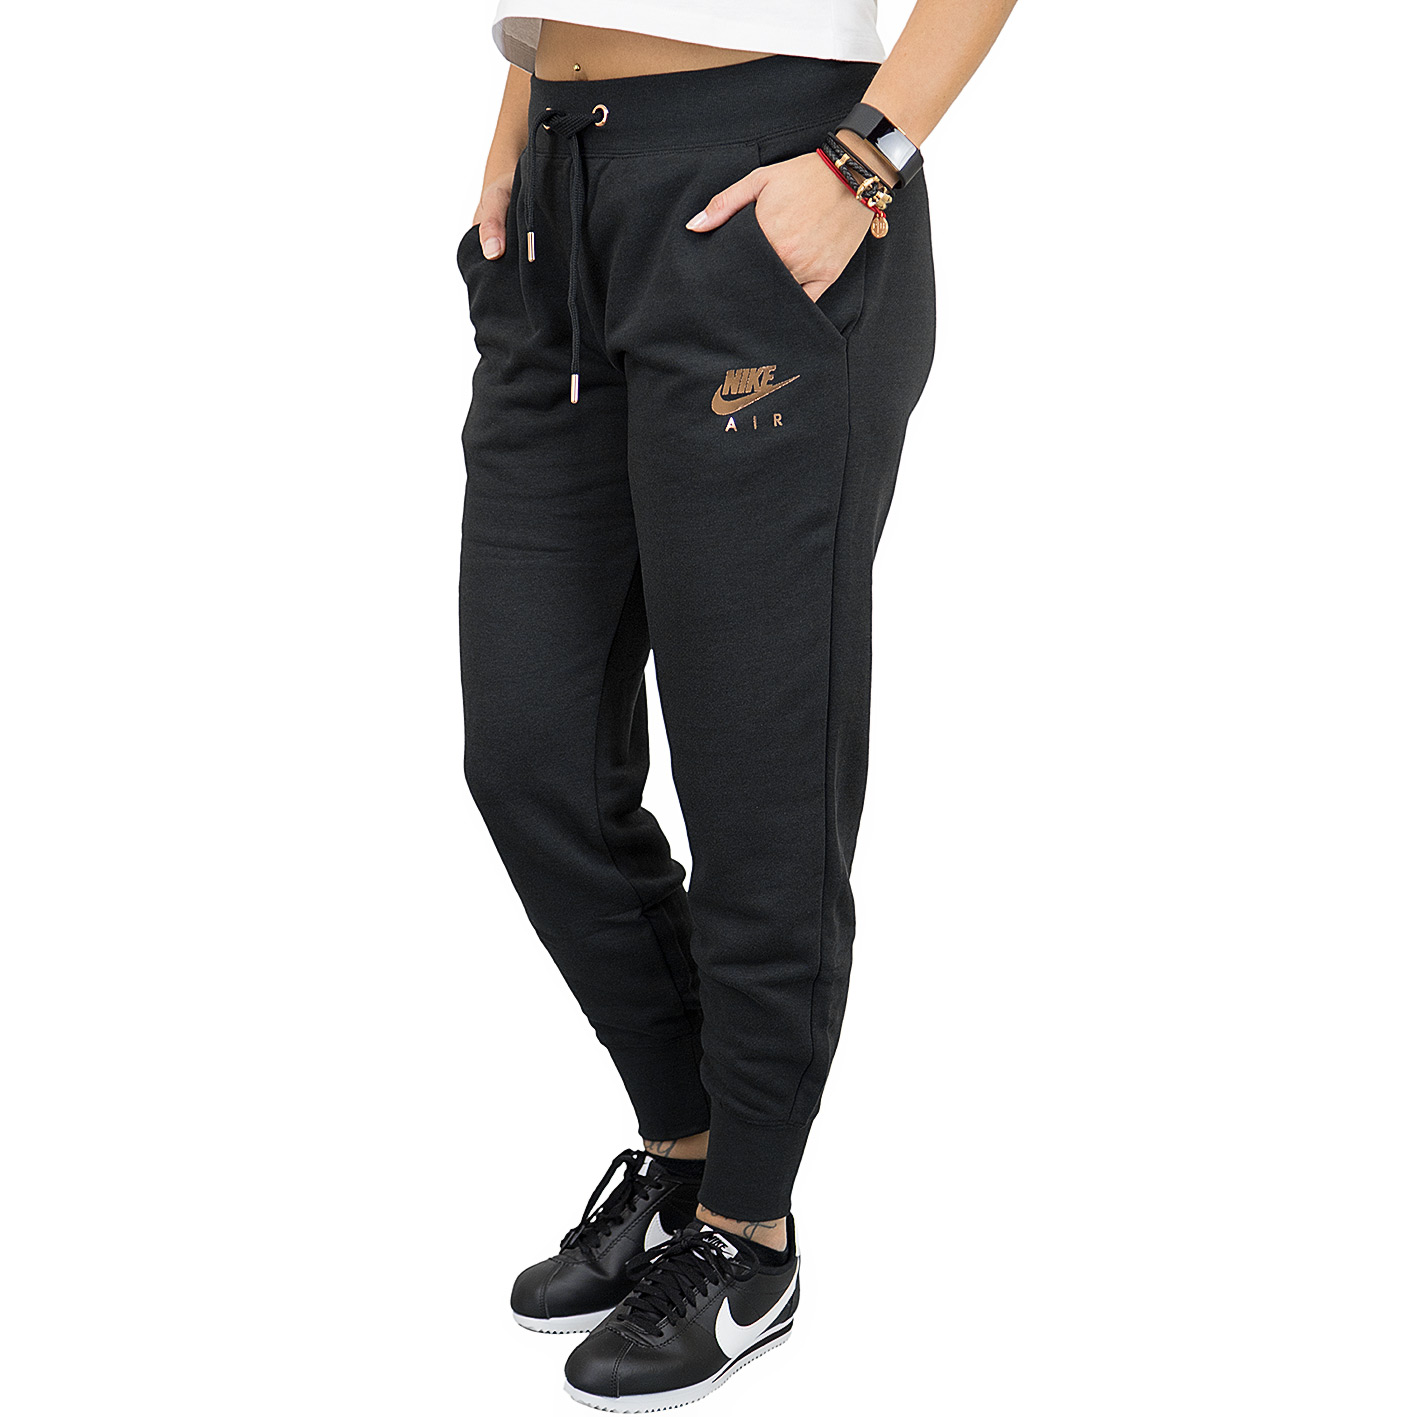 ☆ Nike Damen Sweatpants Air Reg Fleece schwarz - hier bestellen!